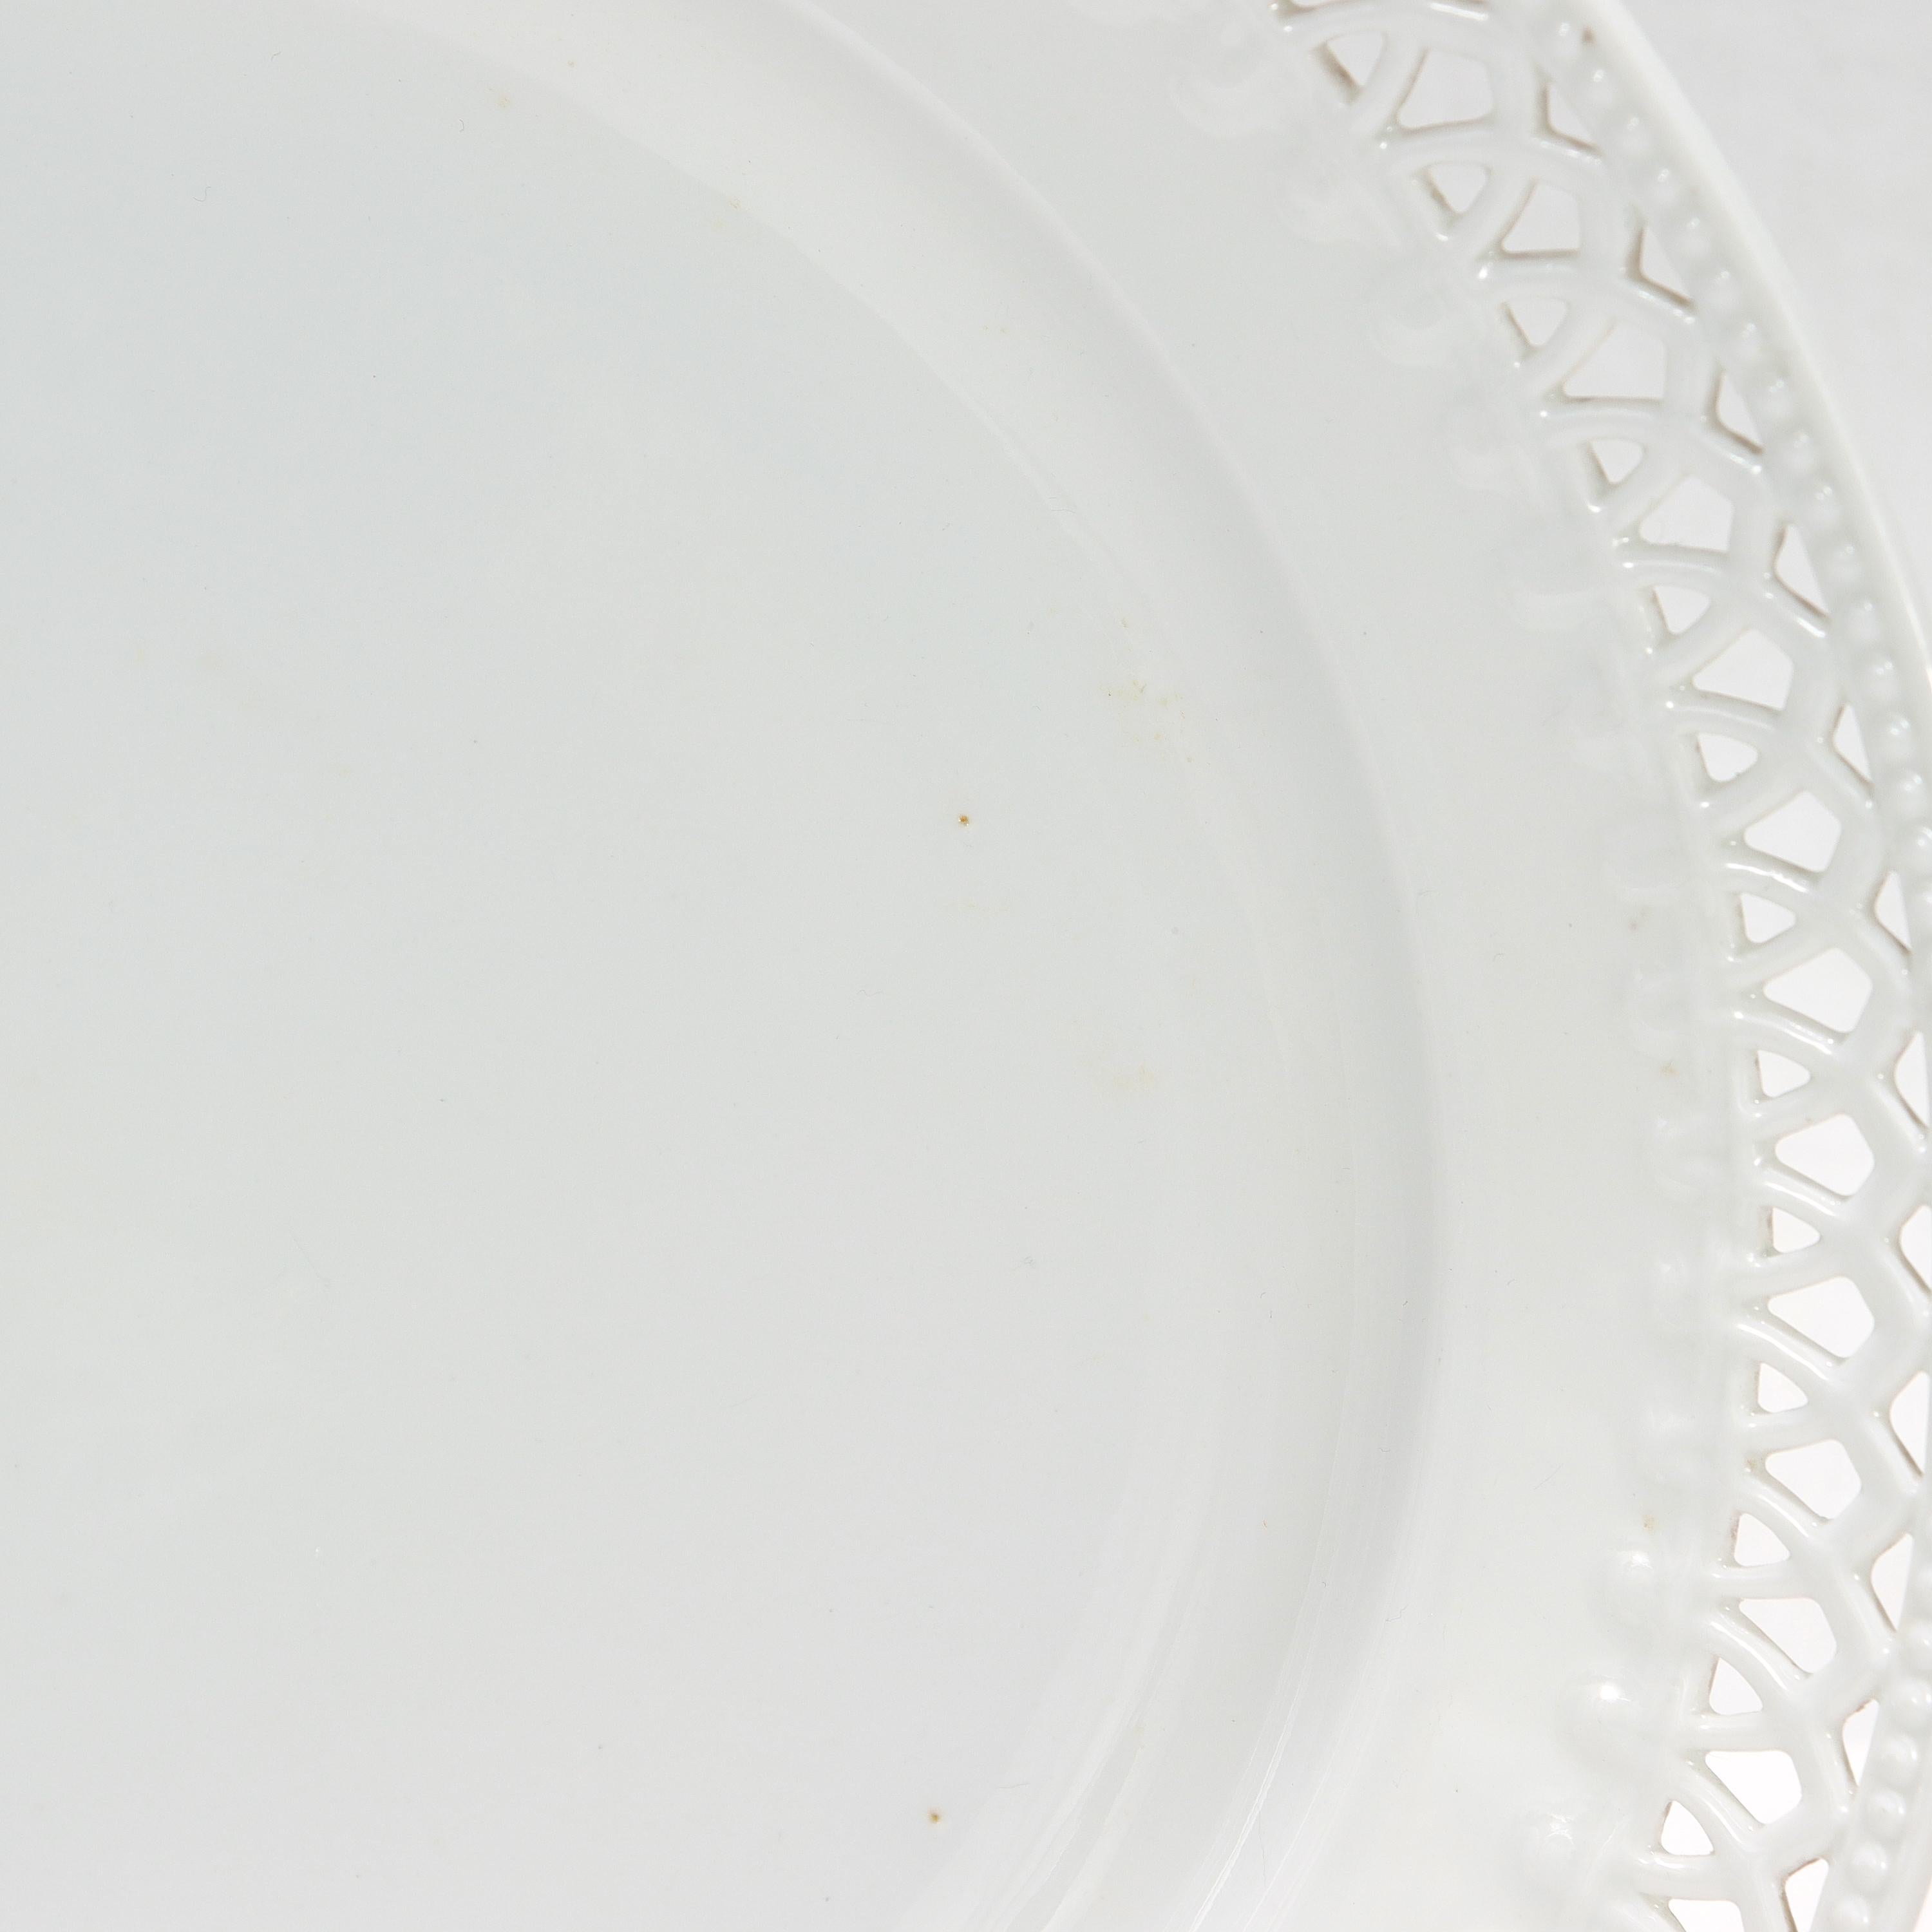 German Set of 12 KPM Royal Berlin Reticulated Blanc de Chine Porcelain Dinner Plates